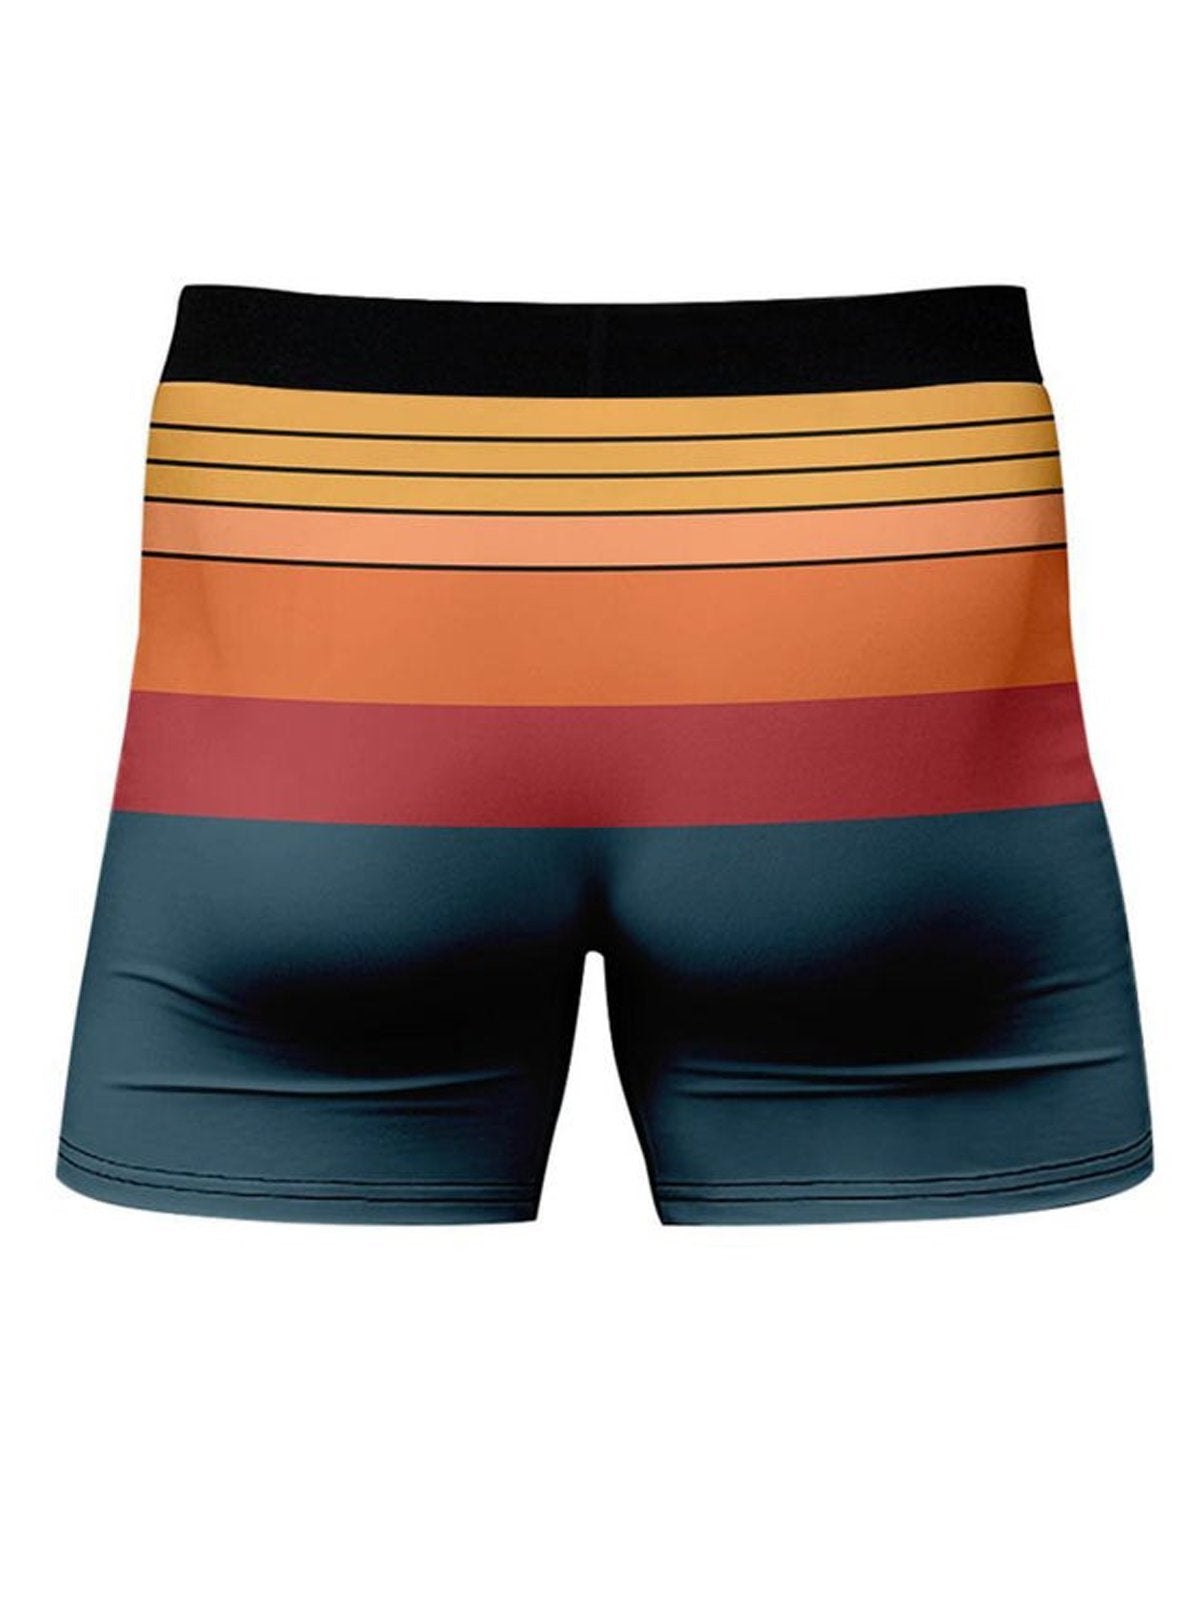 Men's Casual Underwear